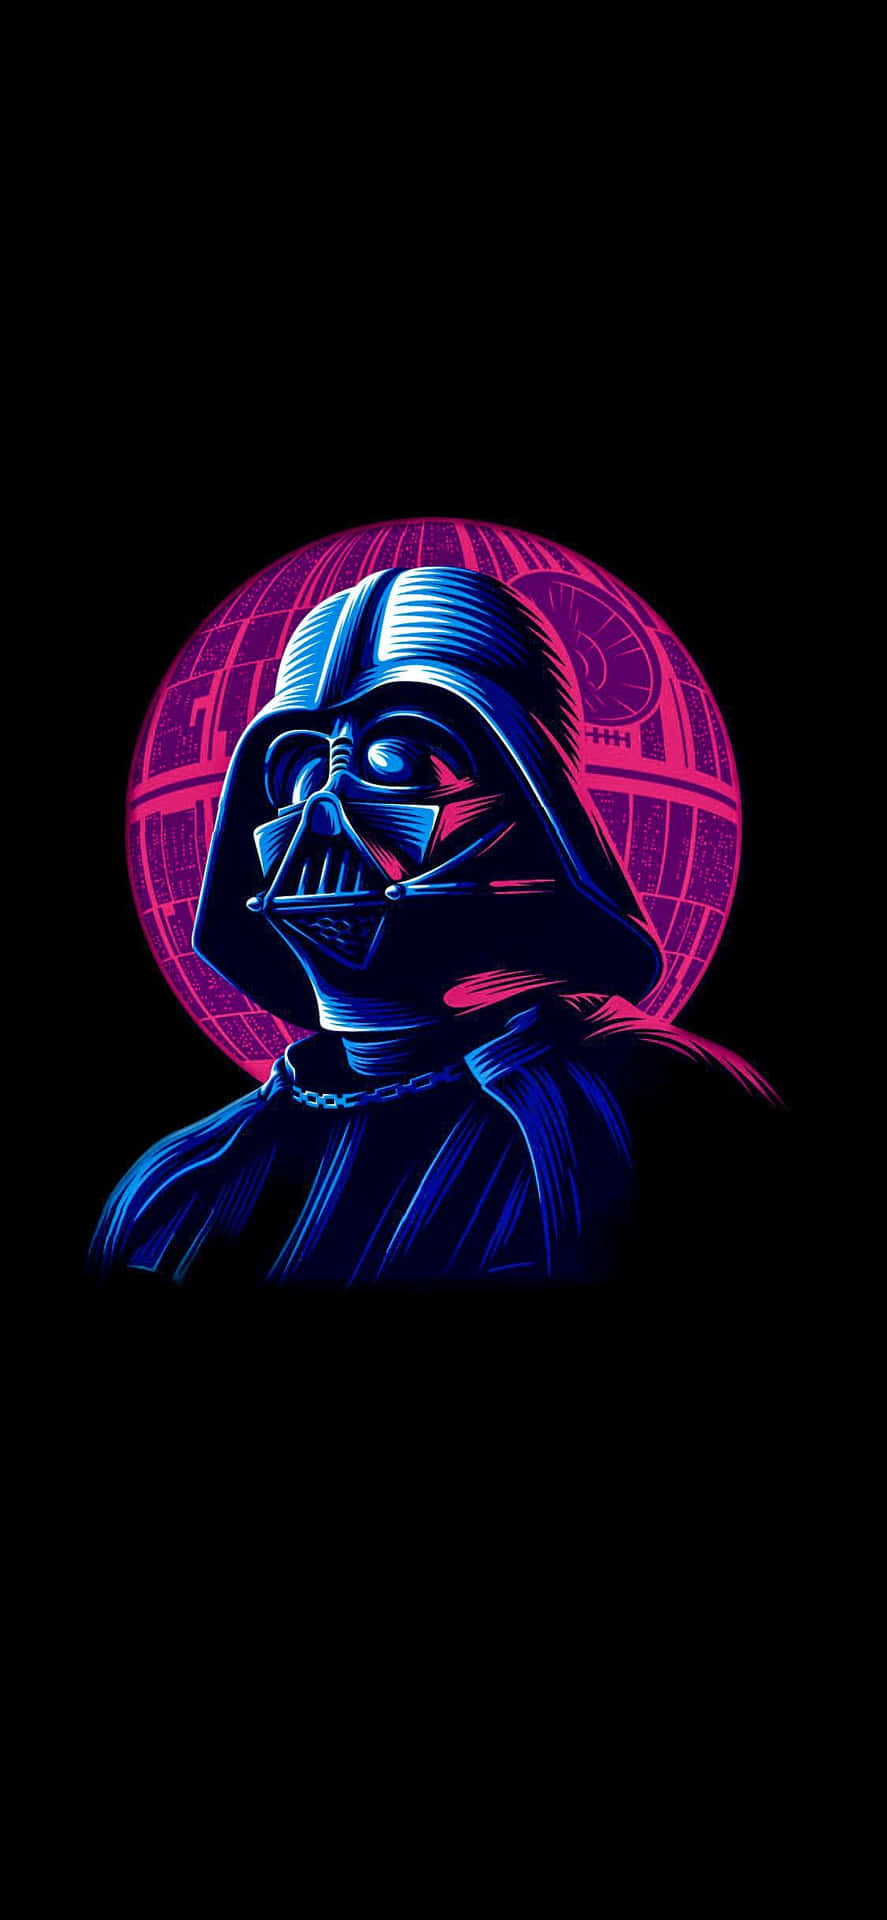 Iphone X Oled Darth Vader Death Star Wallpaper